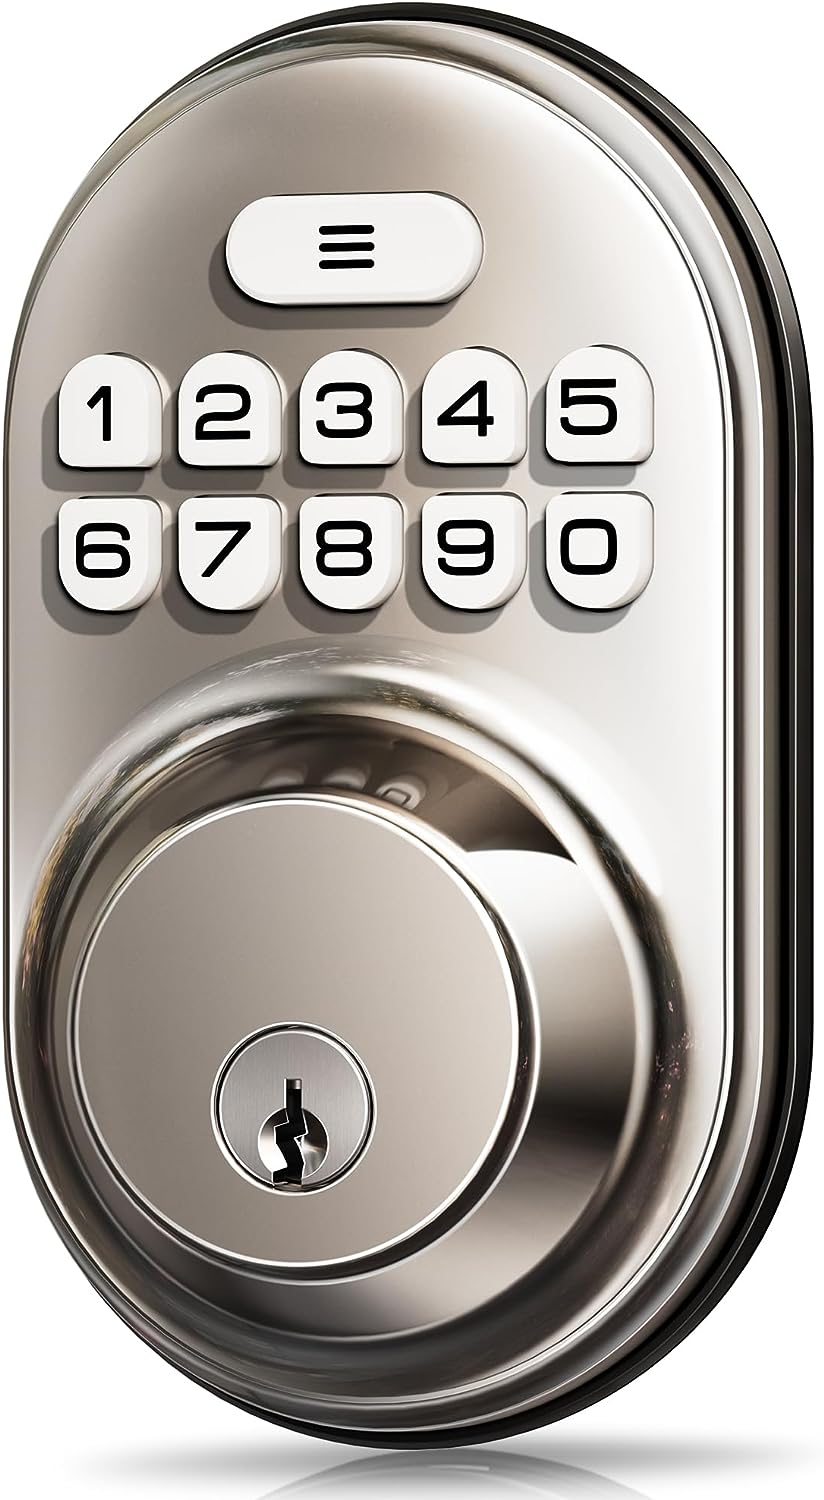 Veise RZ-A Keyless Entry Door Lock, Electronic Keypad Deadbolt, Keyed Entry, Auto Lock, Anti-Peeking Password, Back Lit & Easy Installation Design